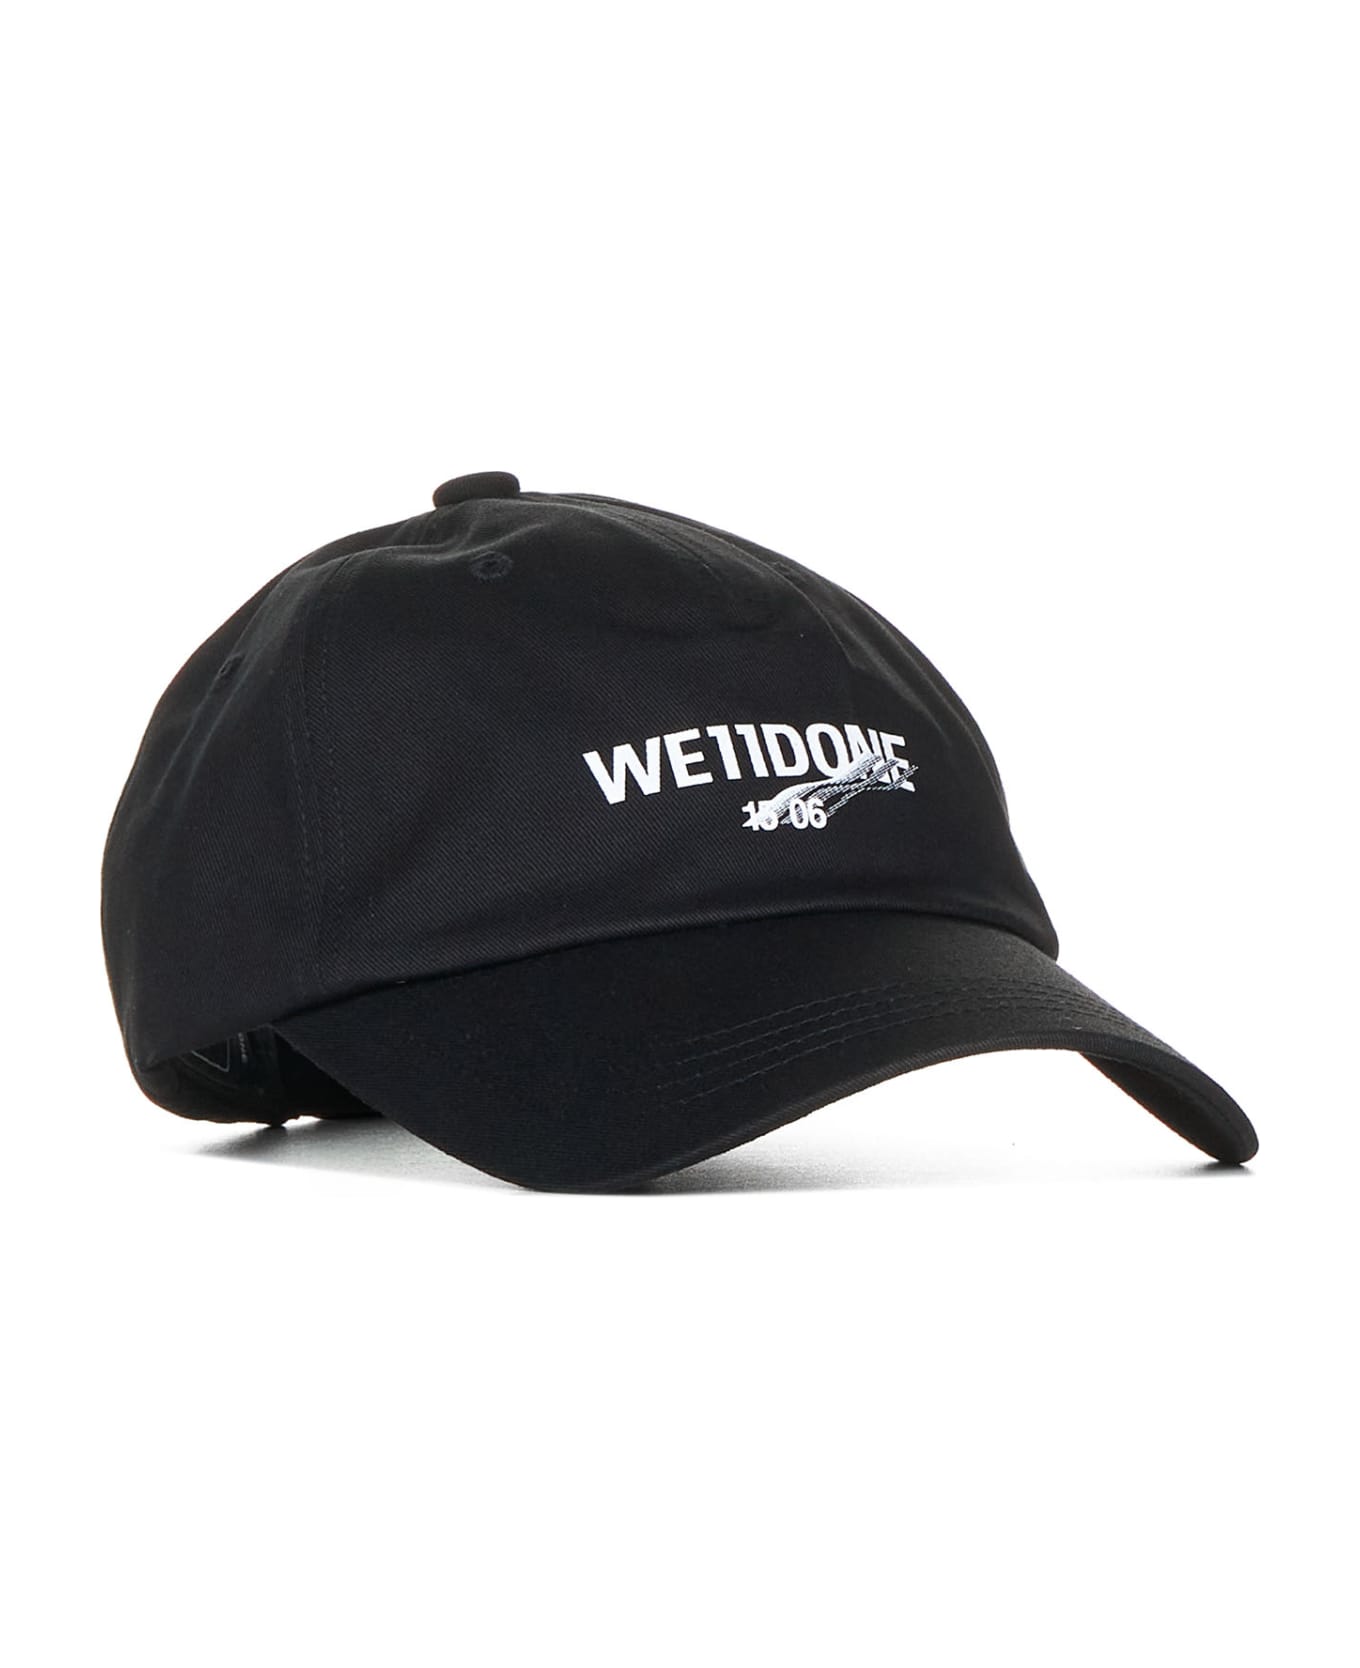 WE11 DONE Hat - Black